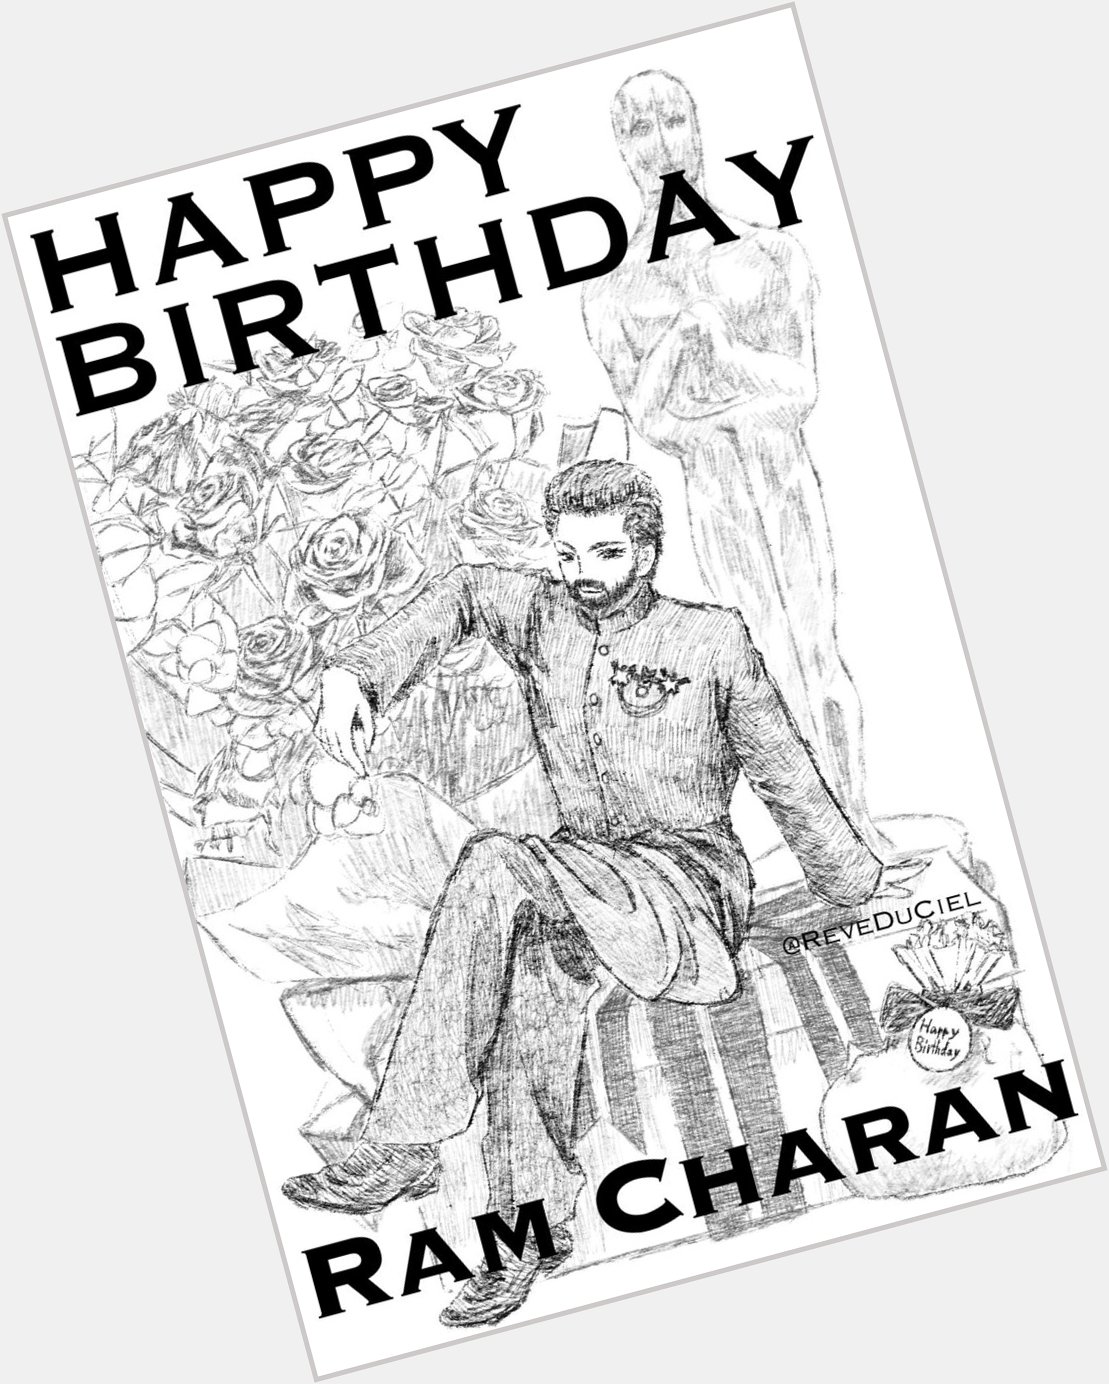 Happy Birthday Ram Charan garu!!!
Wishing you all the best!!!  